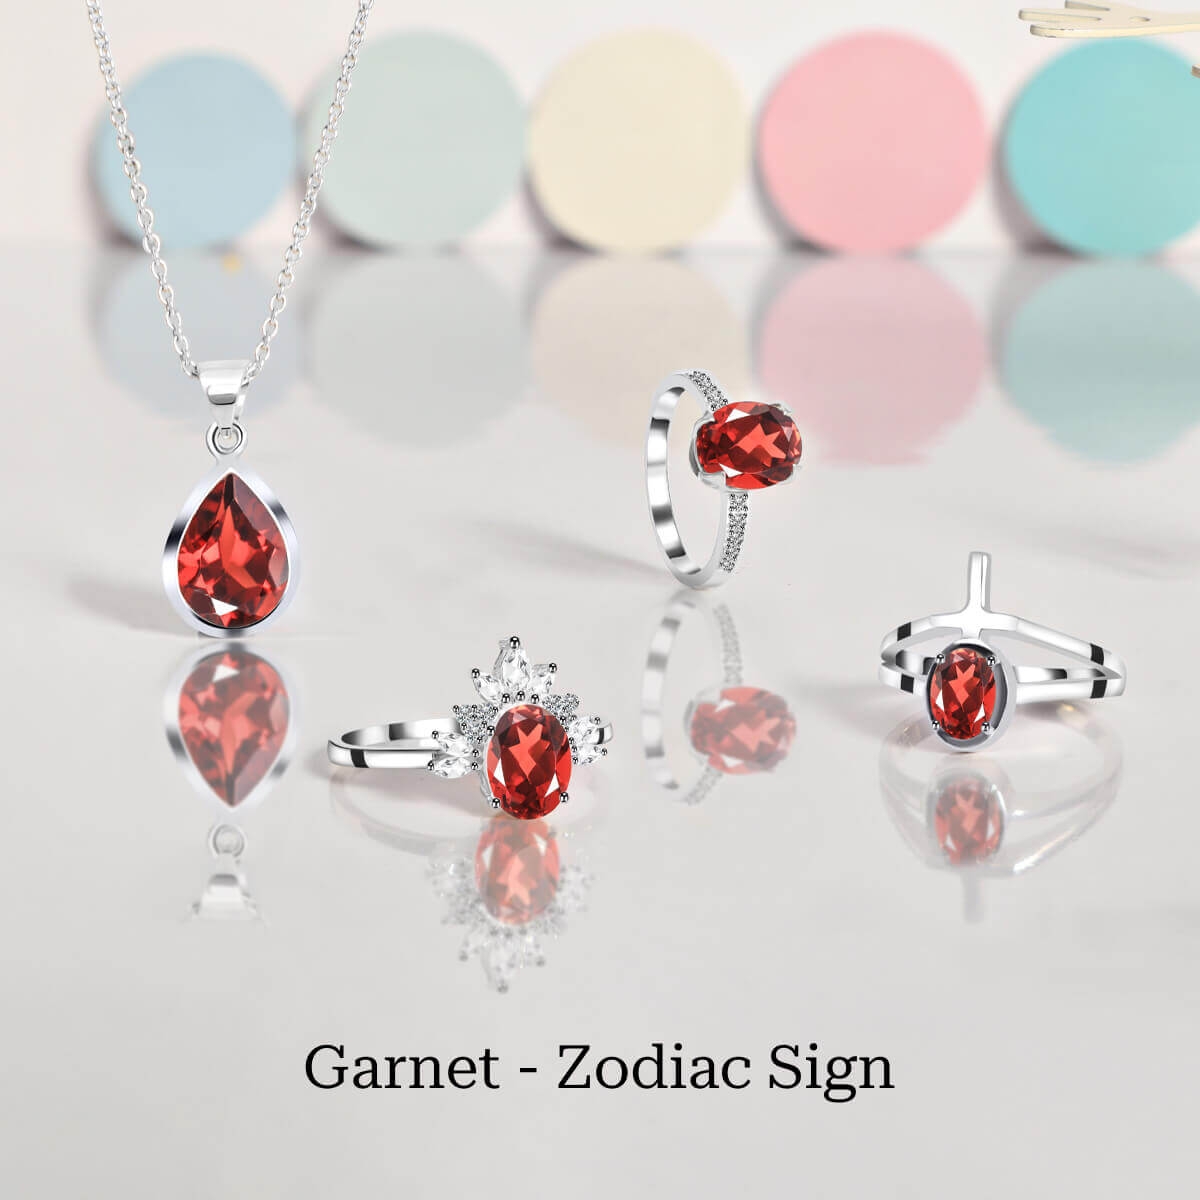 Zodiac Sign Of Garnet